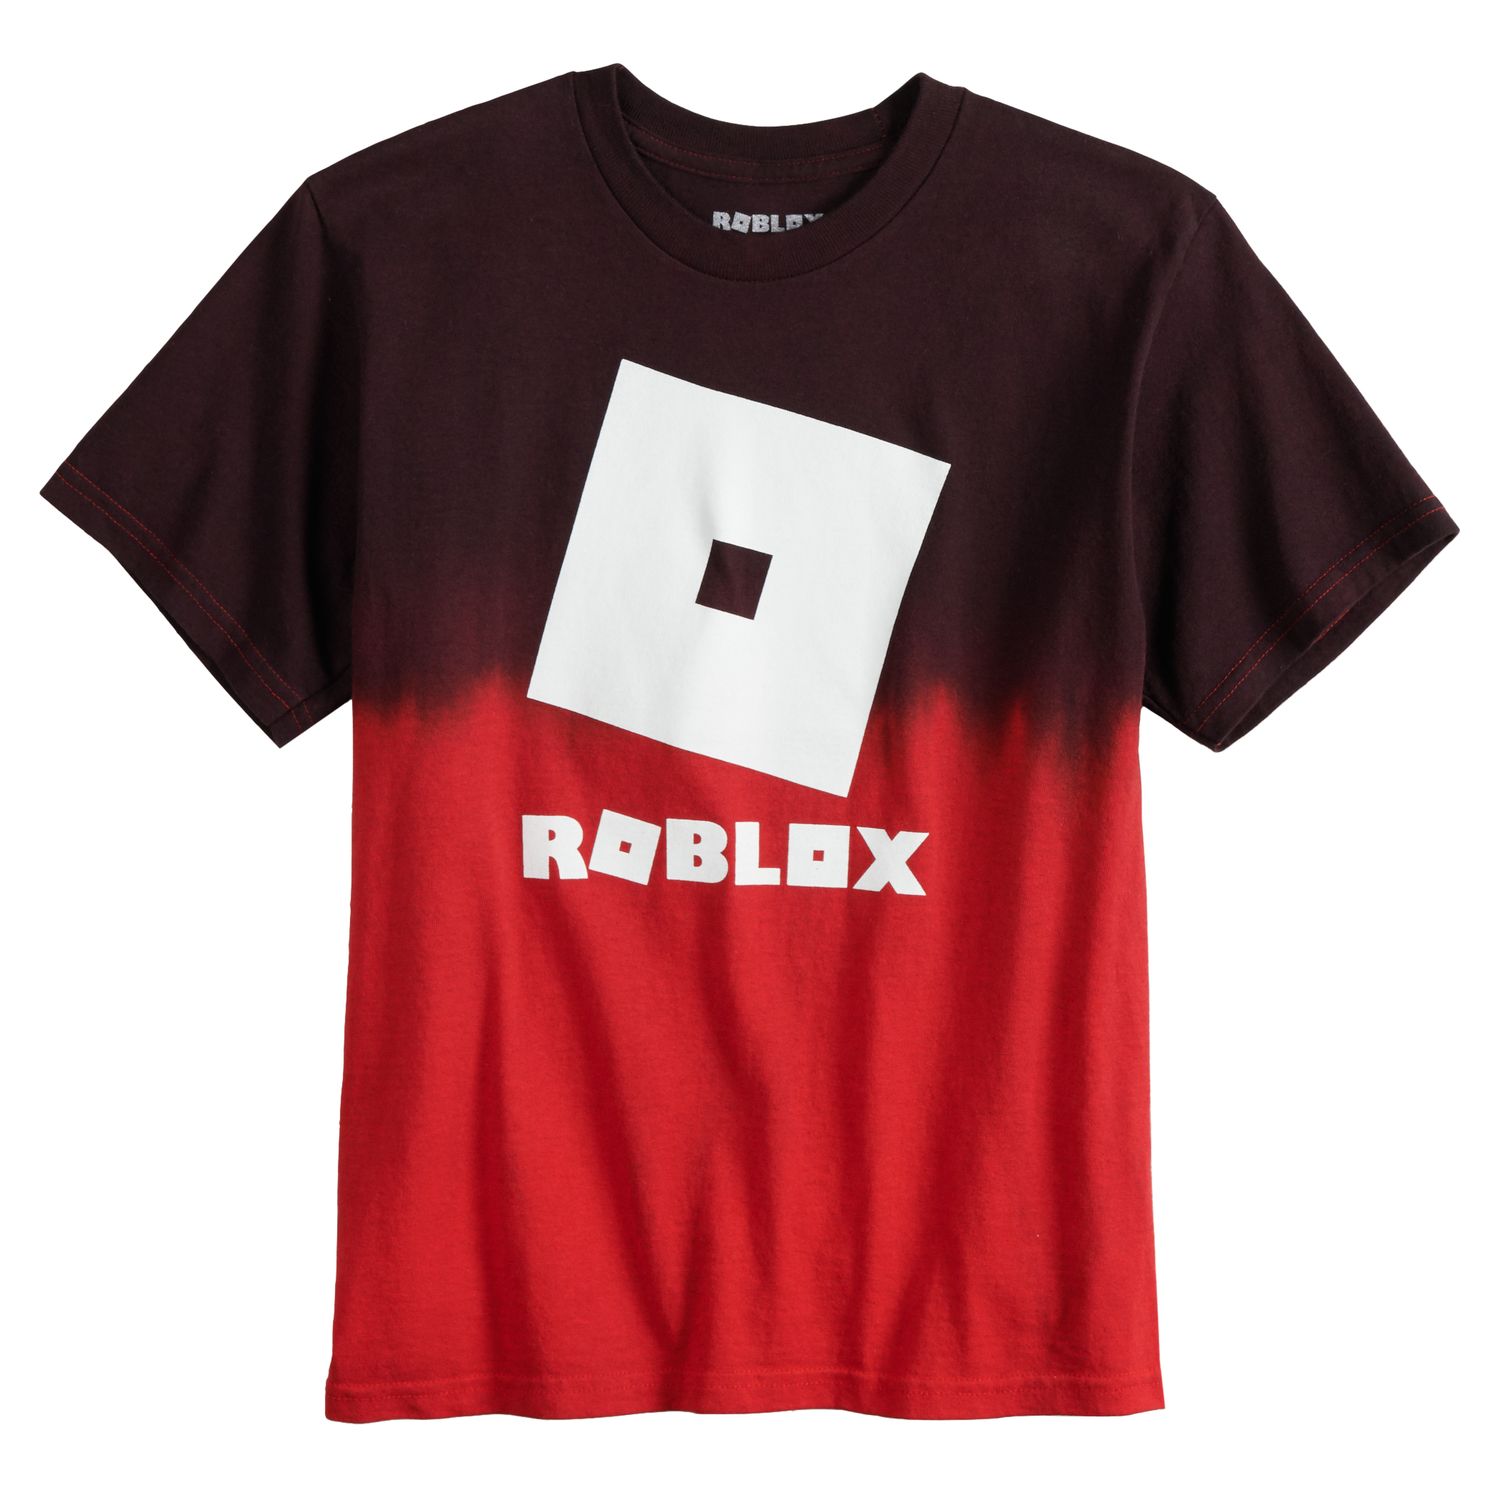 Roblox T Shirt For Boys - roblox t shirts for boys